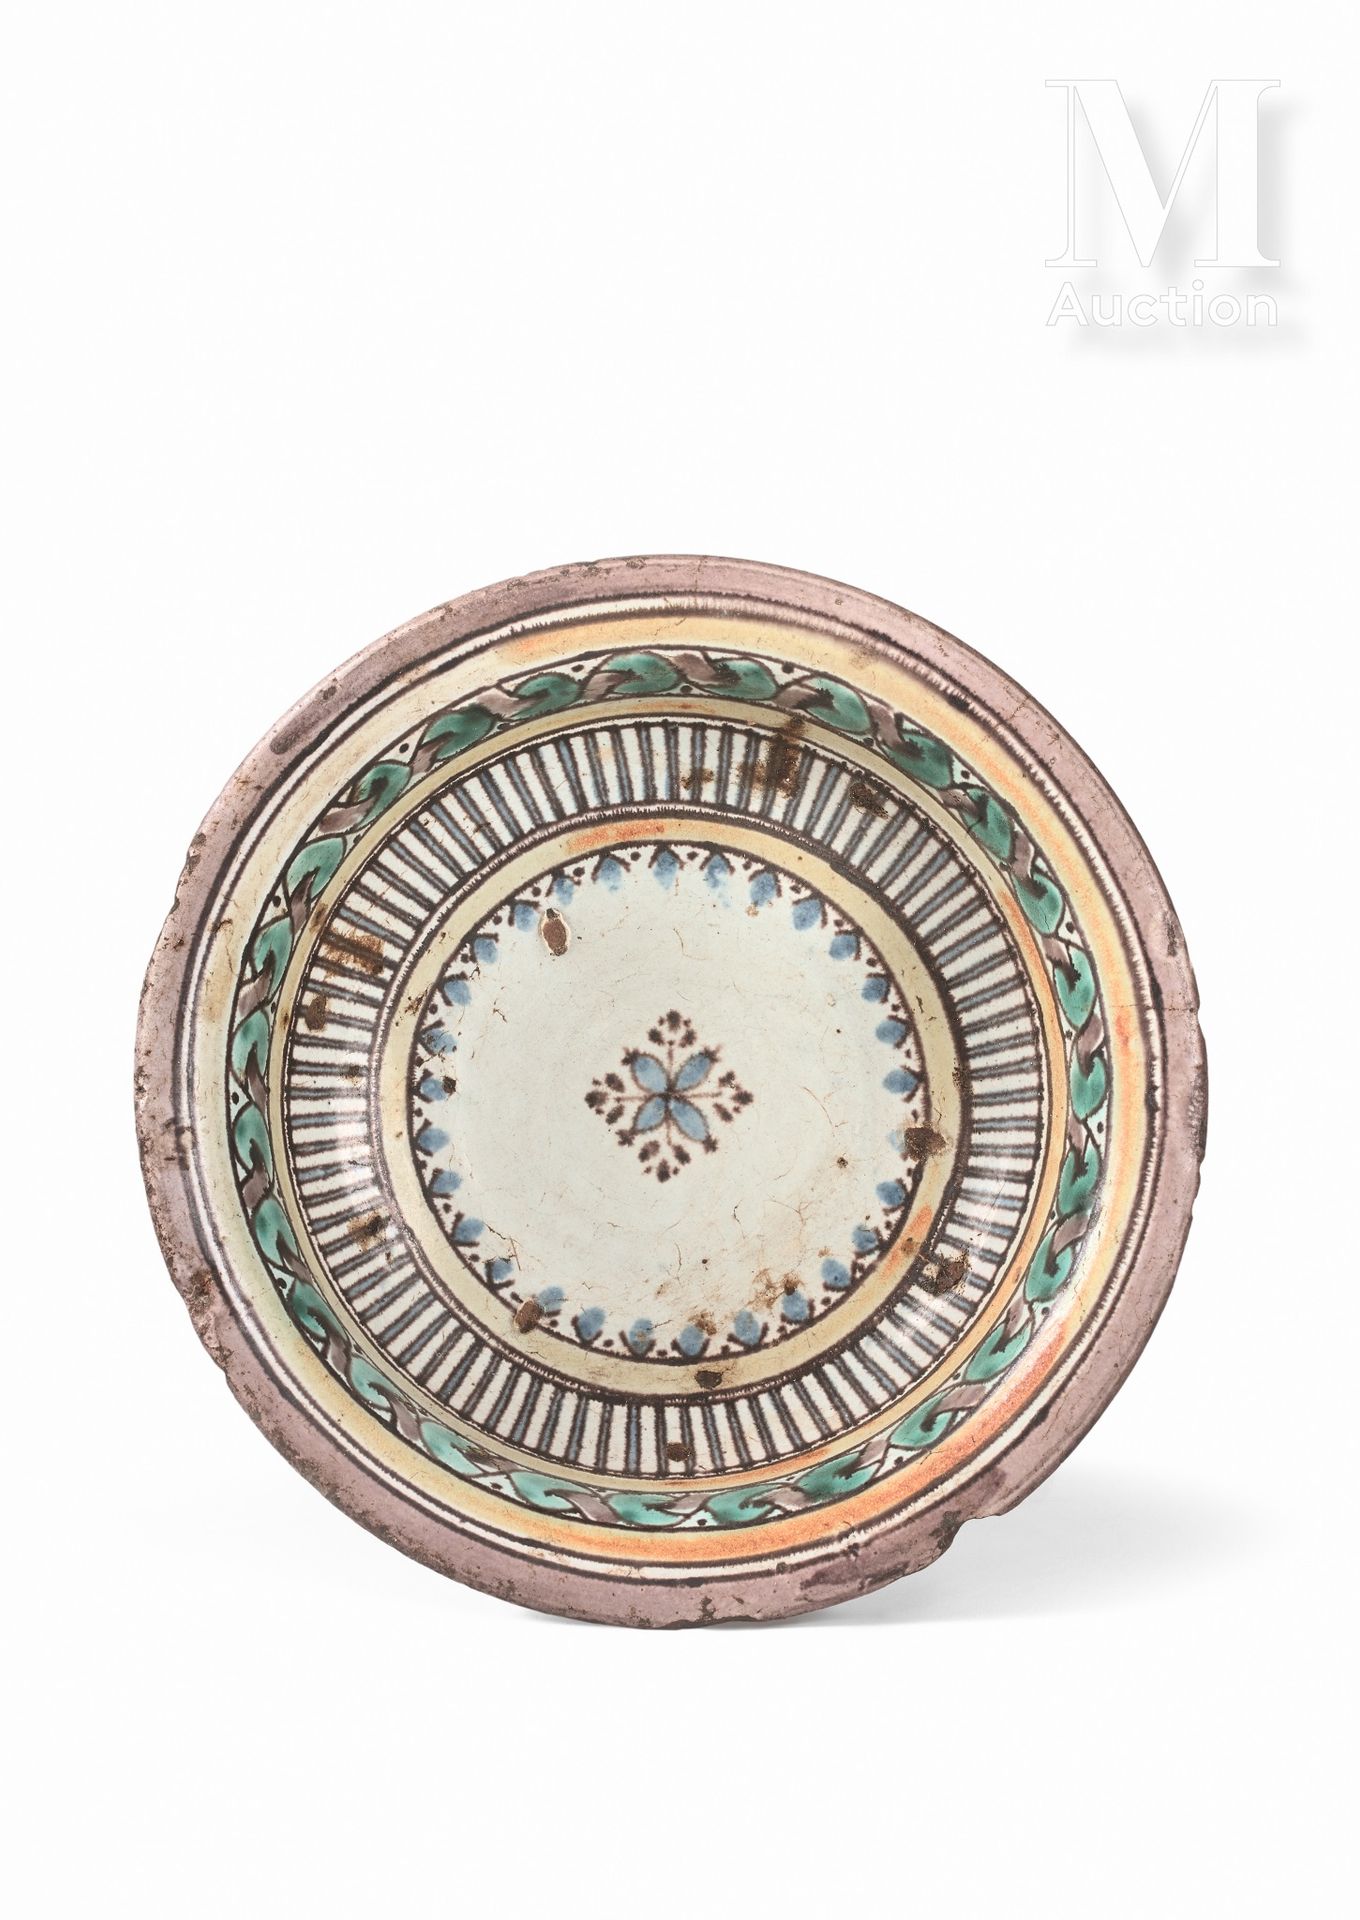 Tobsil de Fès Morocco, 18th century

Hollow dish resting on a pedestal in cerami&hellip;